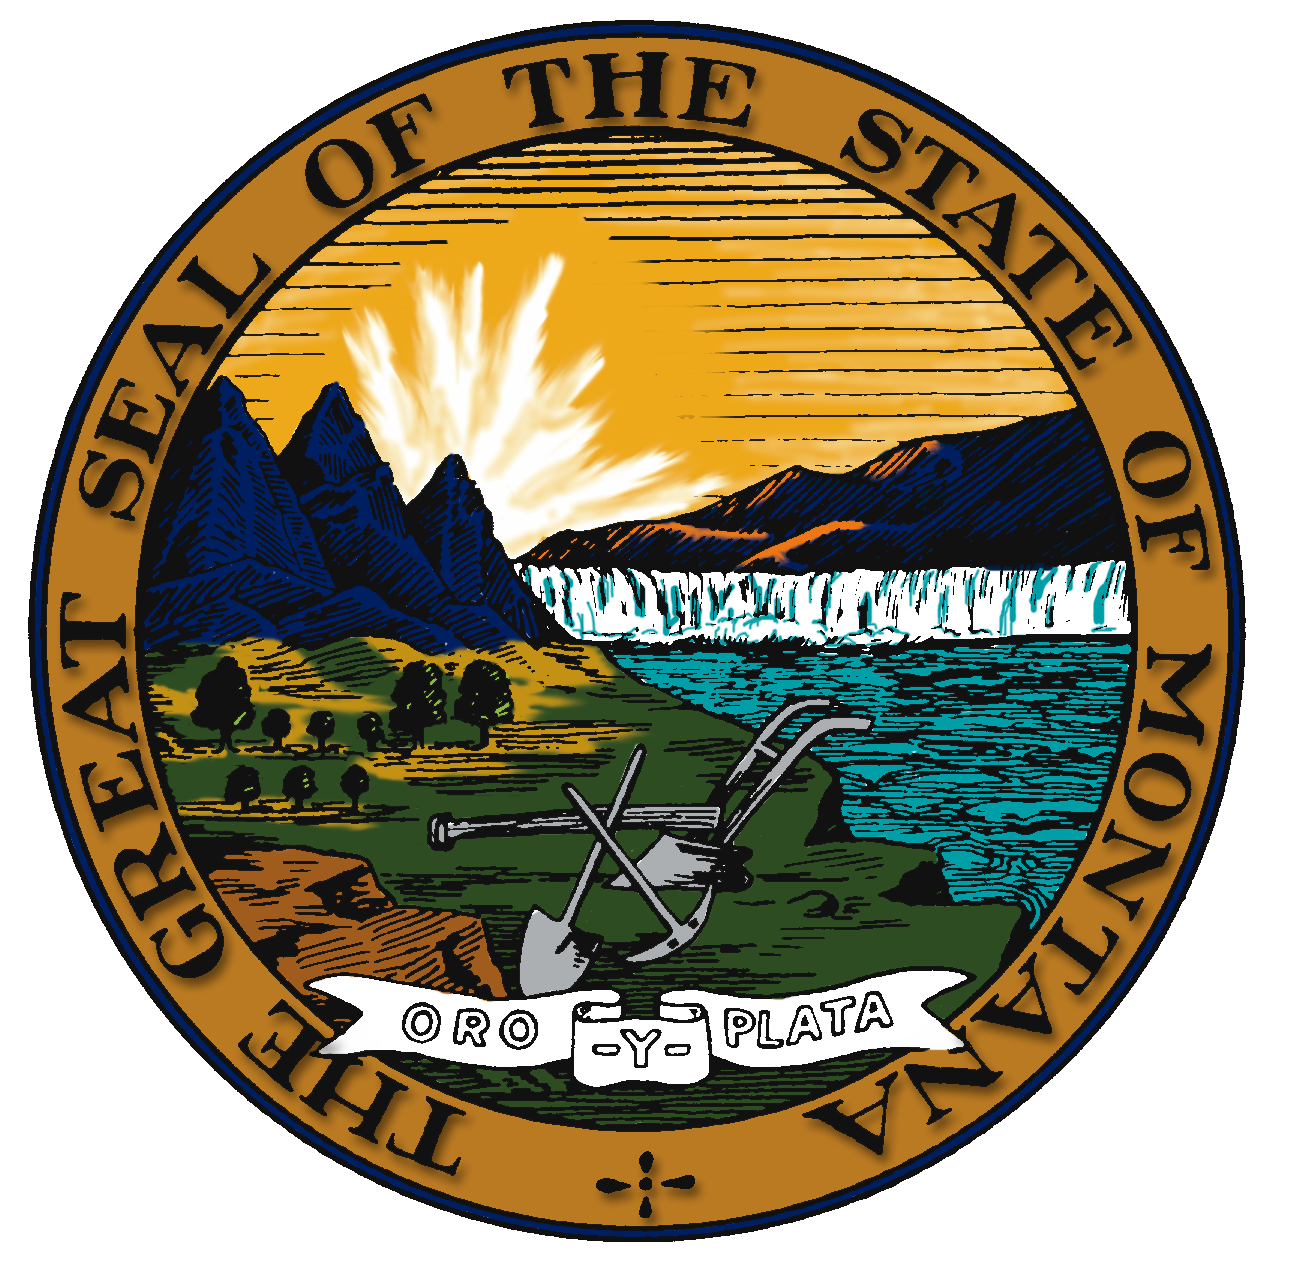 Montana Legislature